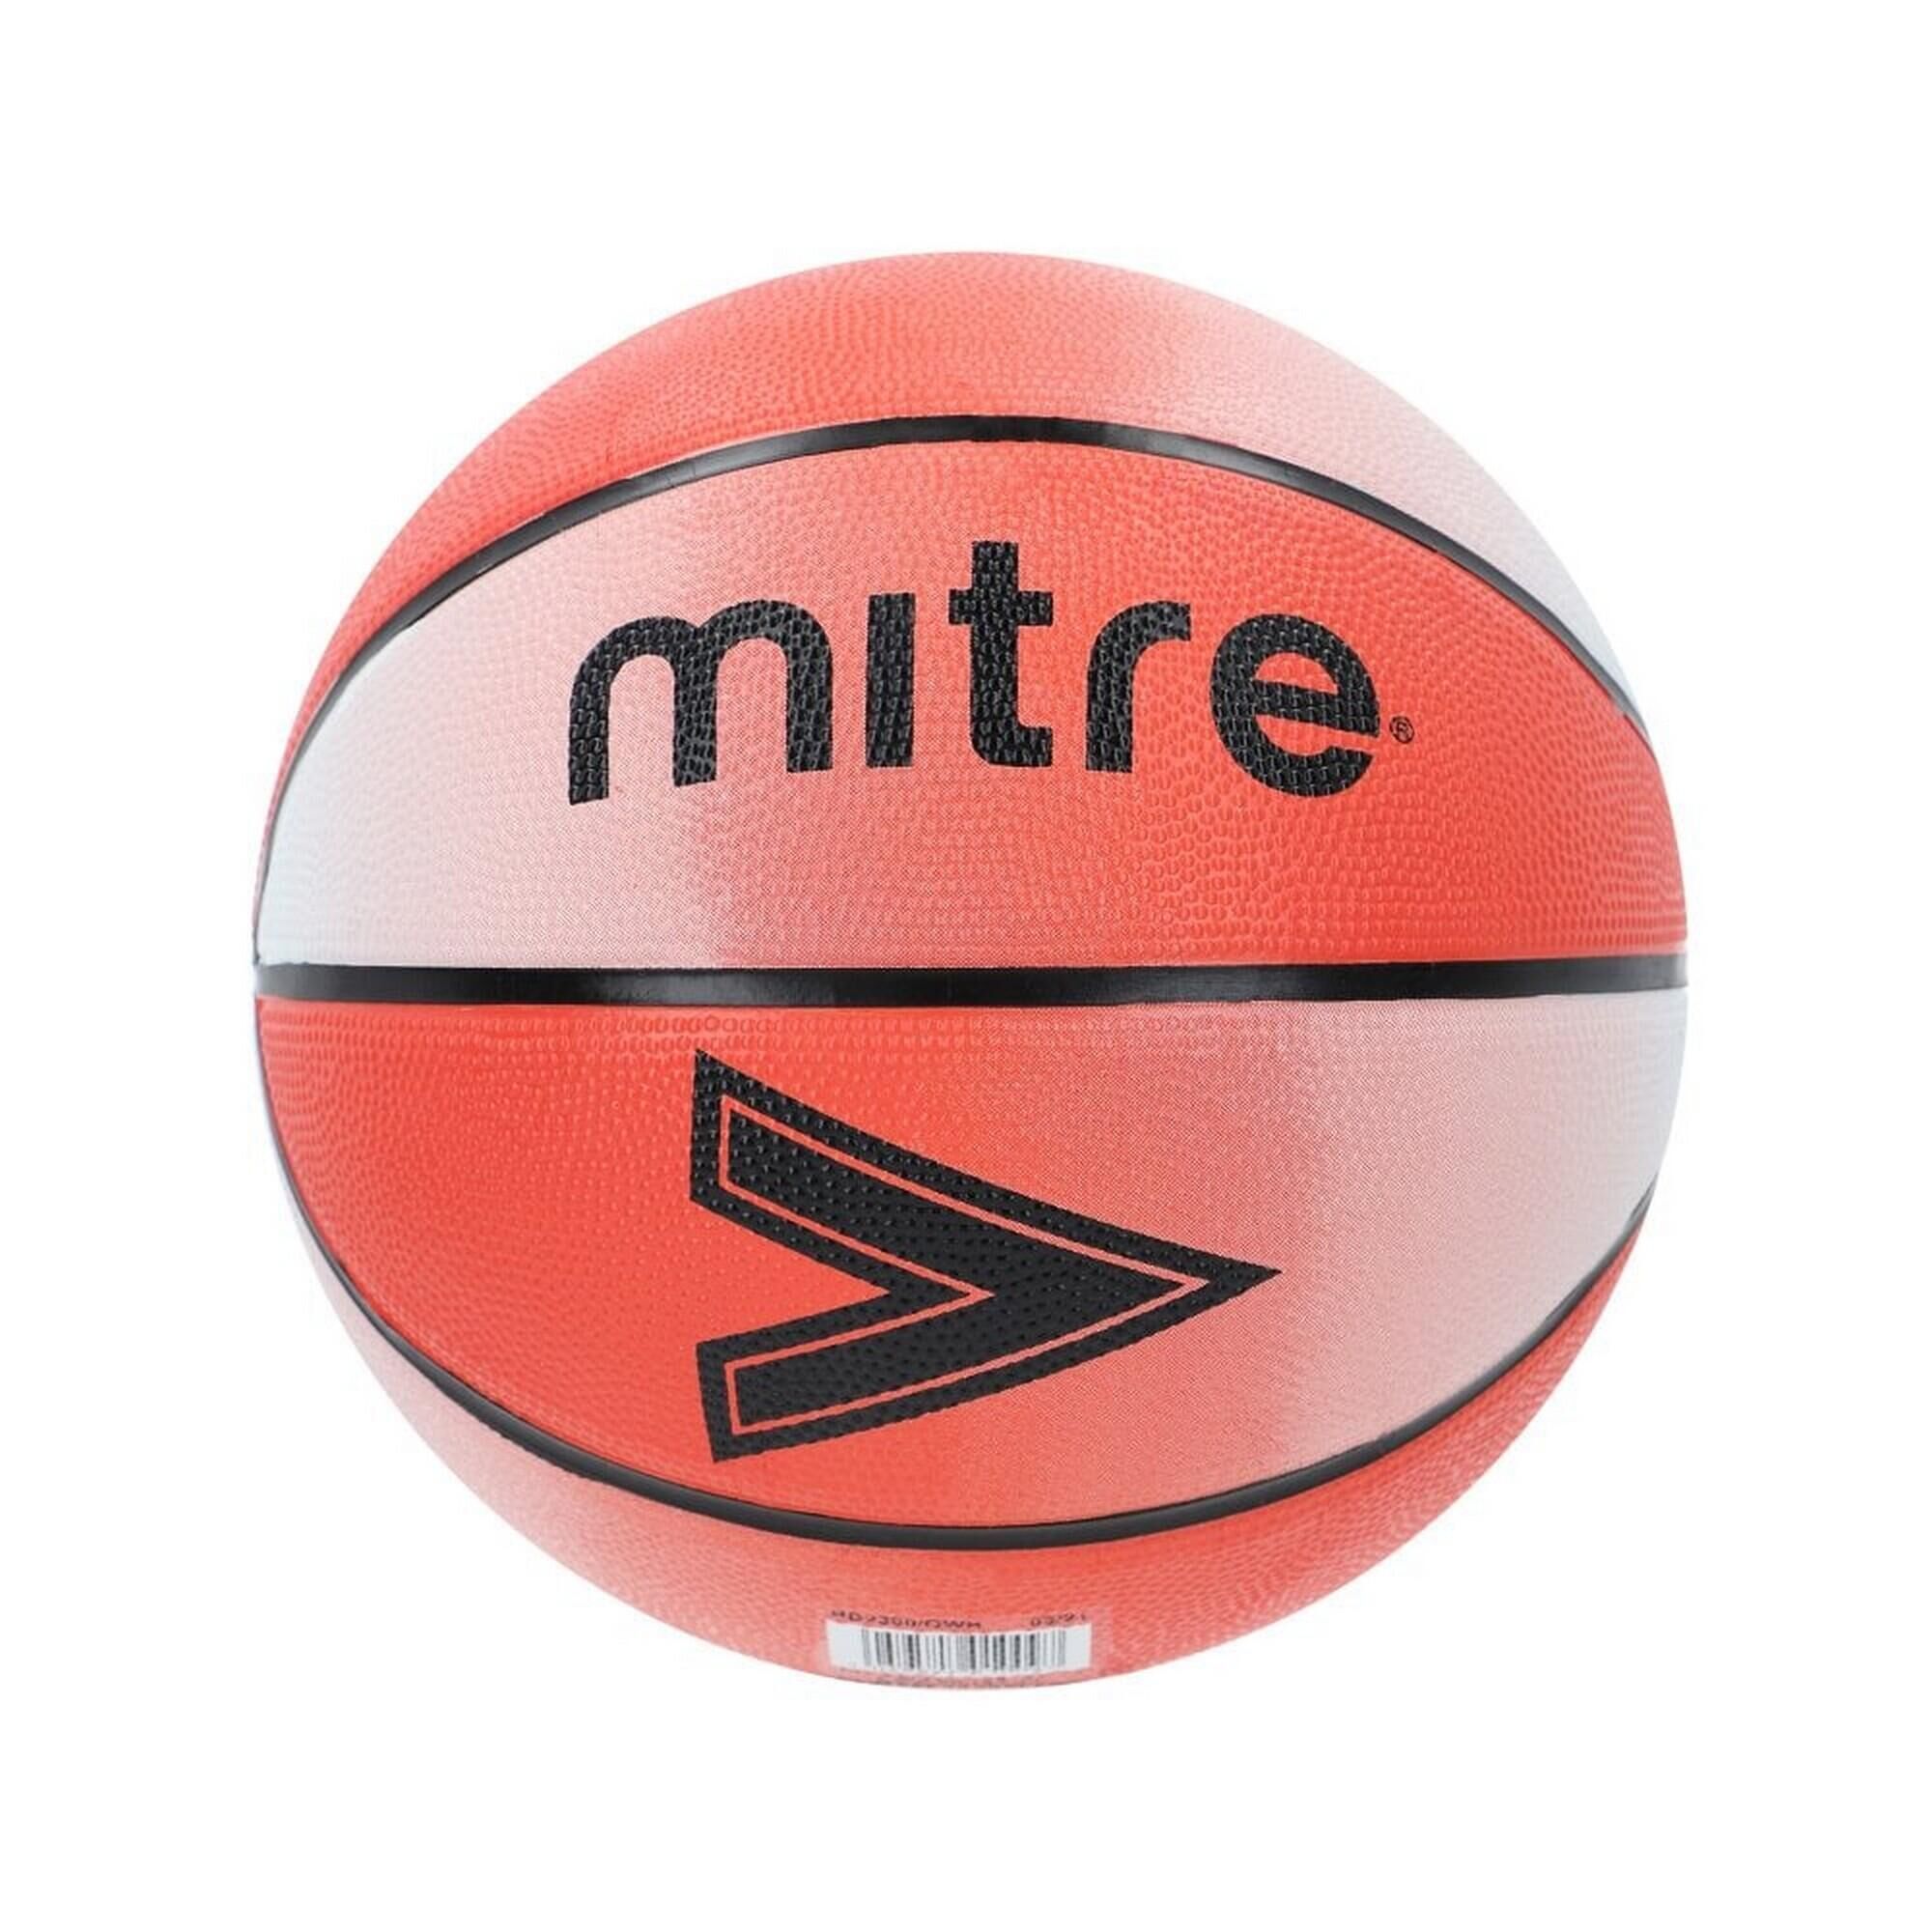 MITRE Wound Nylon Basketball (Orange/Black)